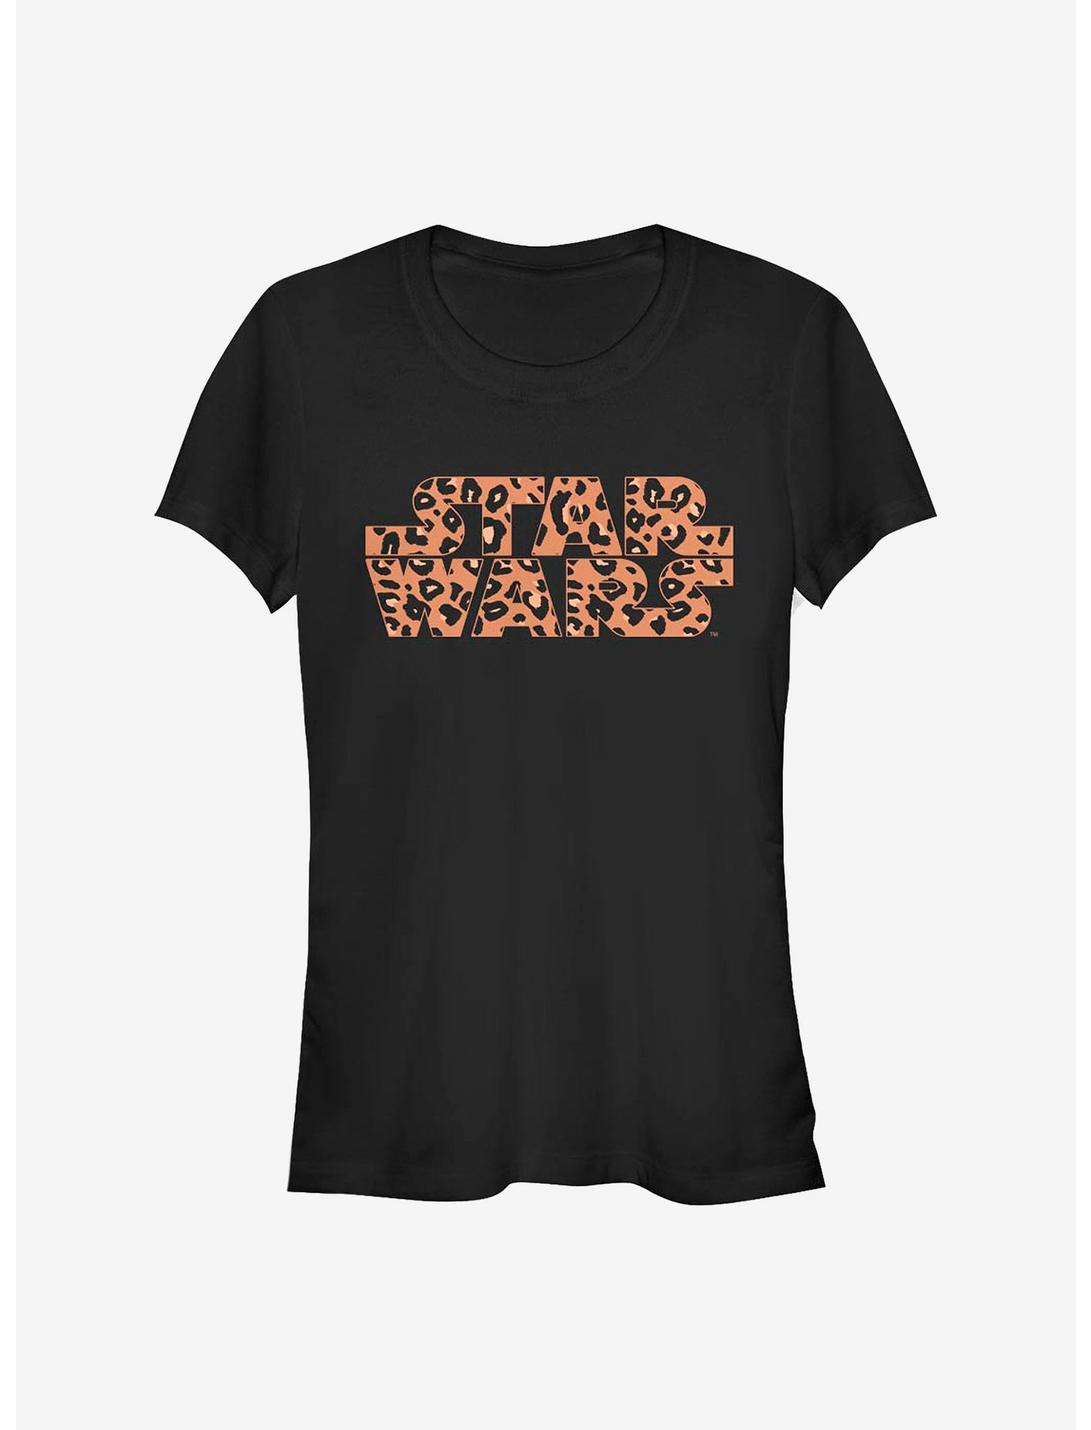 Star Wars Star Wars Logo Cheetah Fill Girls T-Shirt, BLACK, hi-res